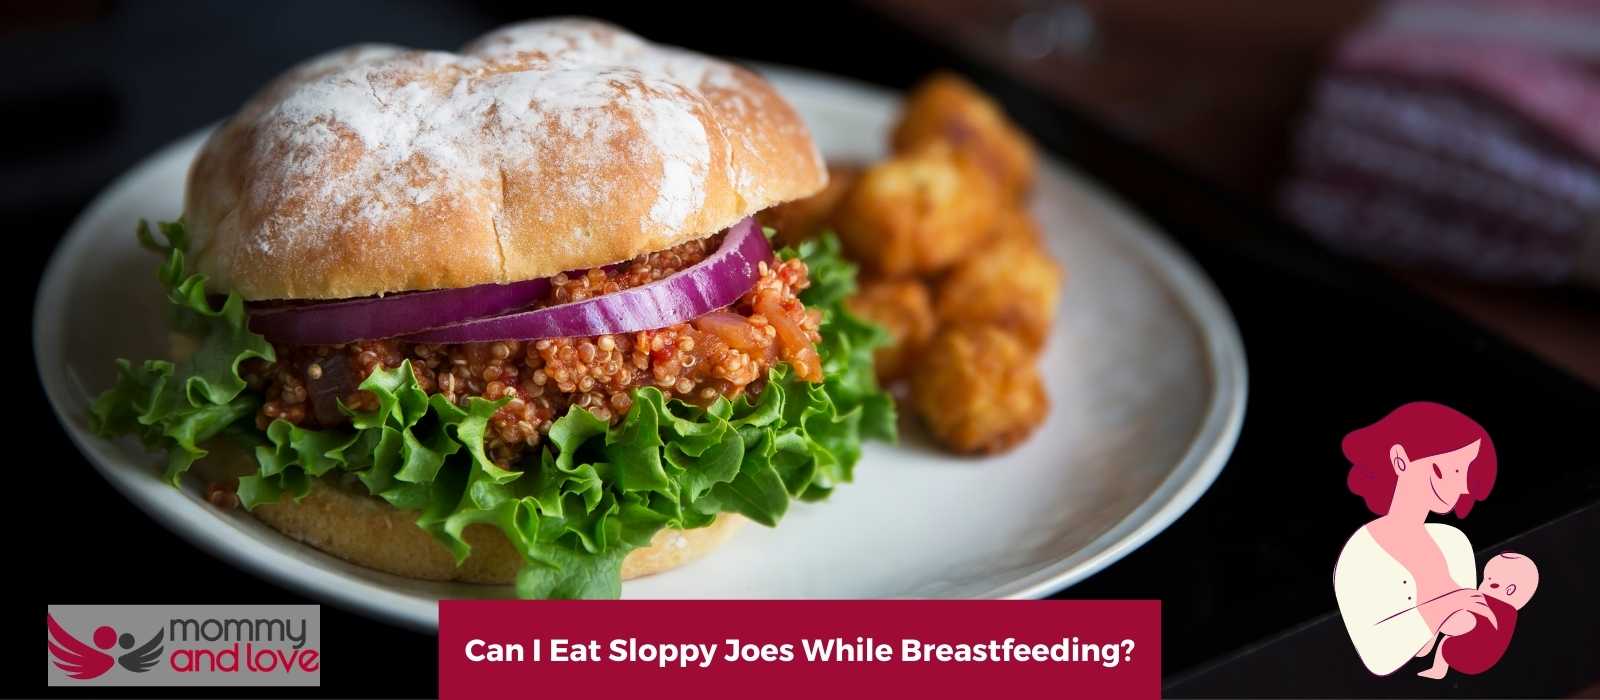 Can I Eat Sloppy Joes While Breastfeeding?